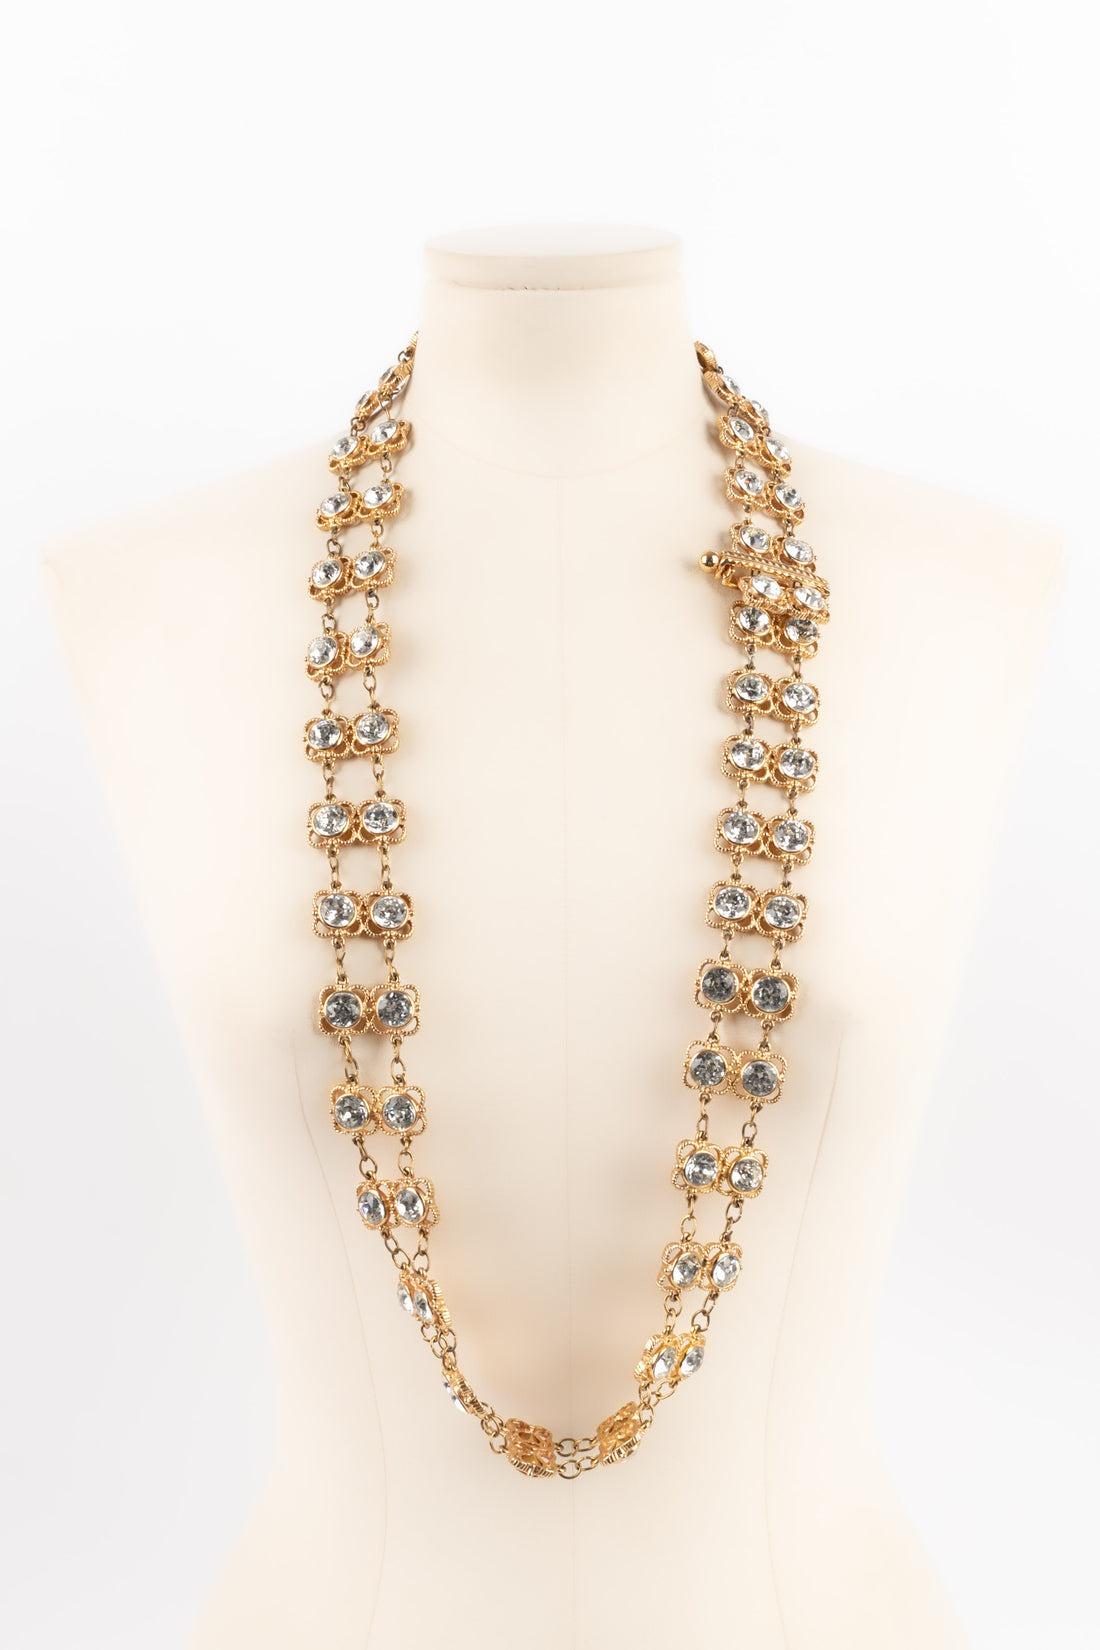 Dior Jewelry Belt in Golden Metal and Rhinestones For Sale 4